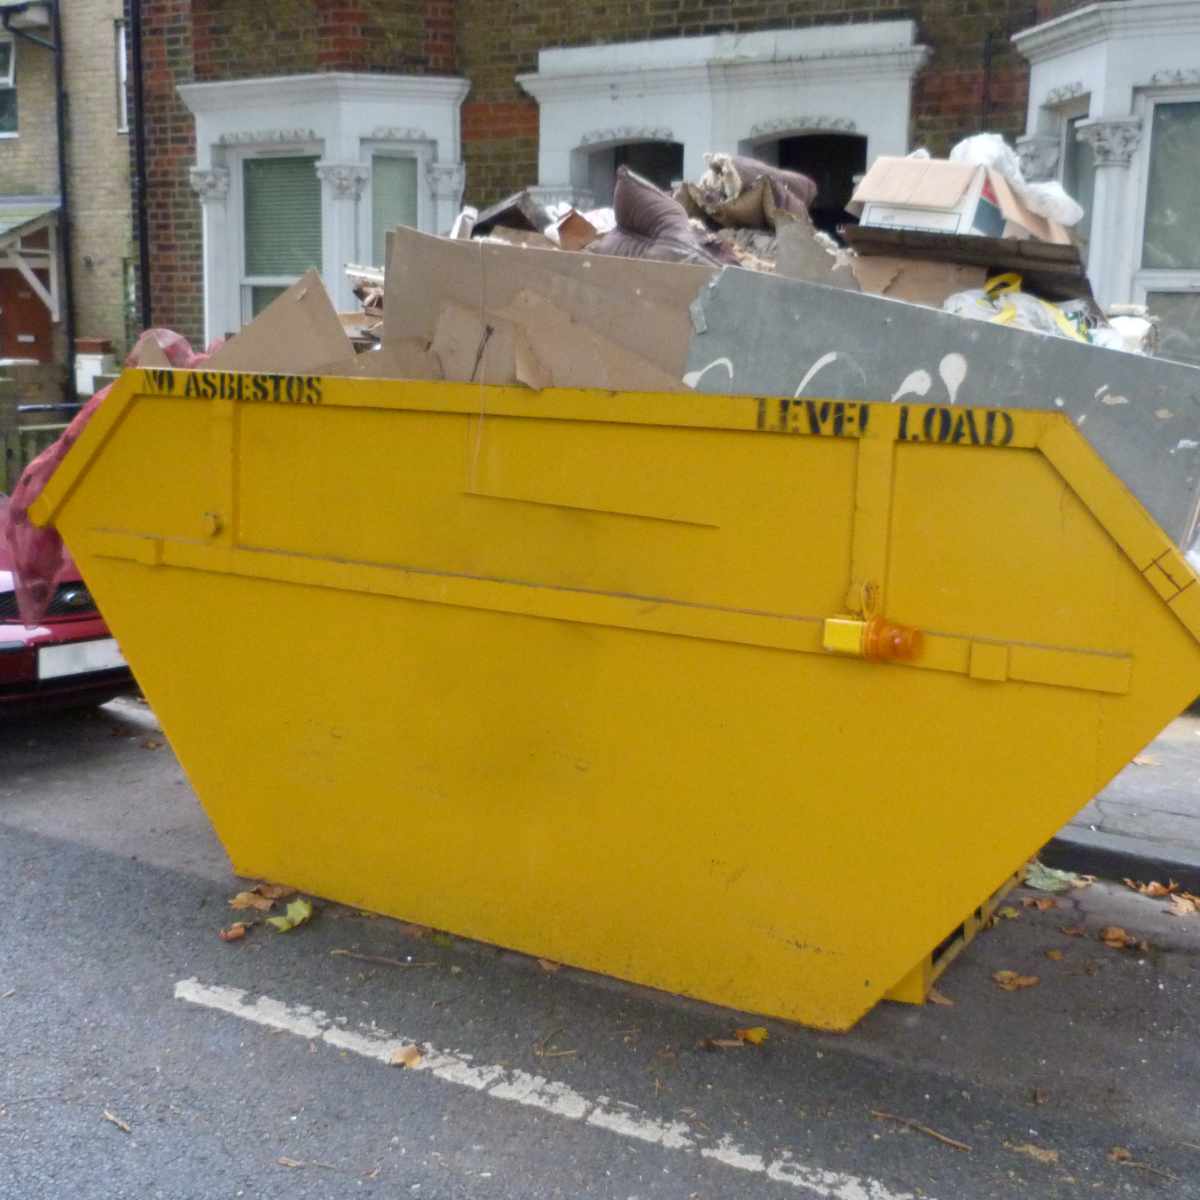 A yellow skip bin on a road outside a house in nottingham.